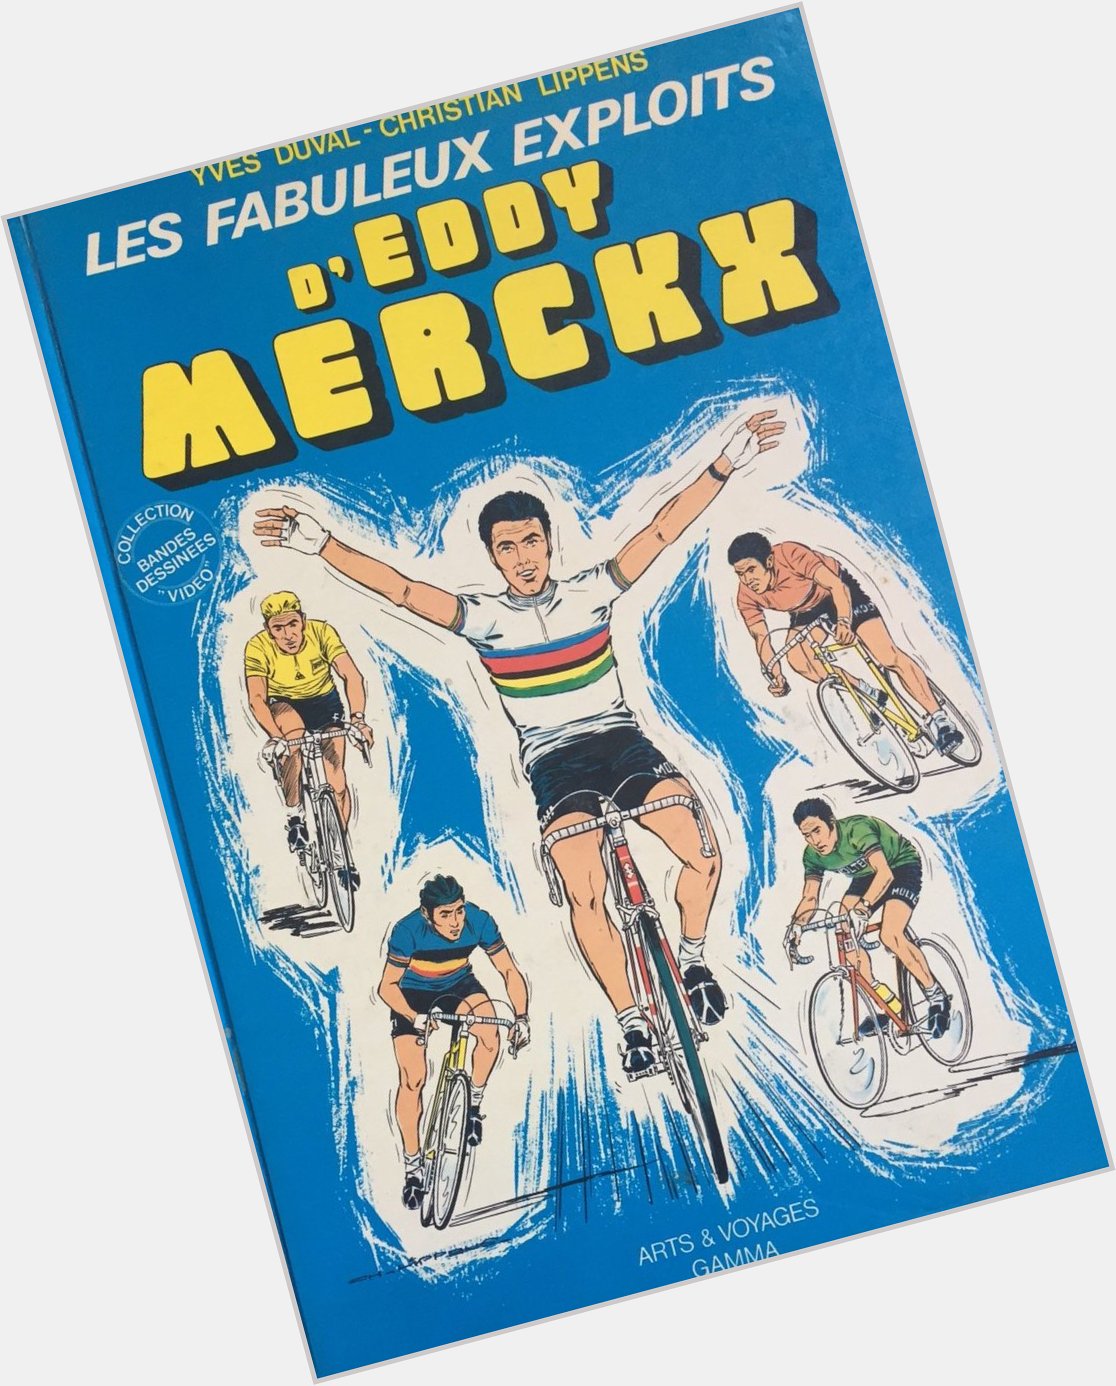 Happy birthday to \"The Cannibal\" Eddy Merckx, 73 today! 